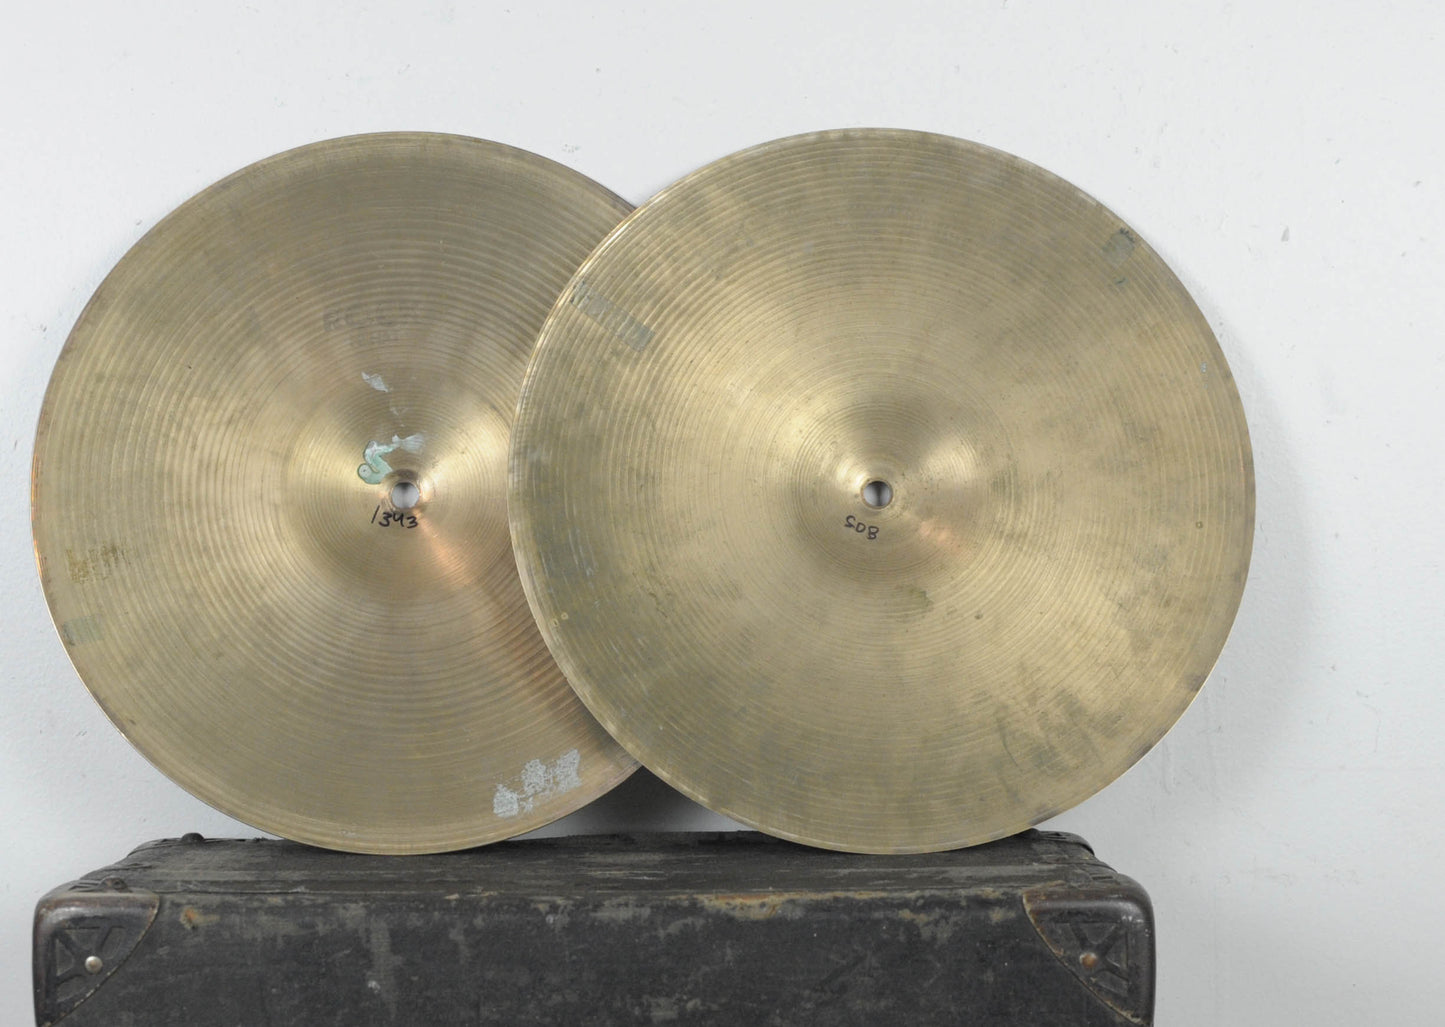 1970s Zildjian A 14" Rock Hi Hat Cymbals 805g 1343g